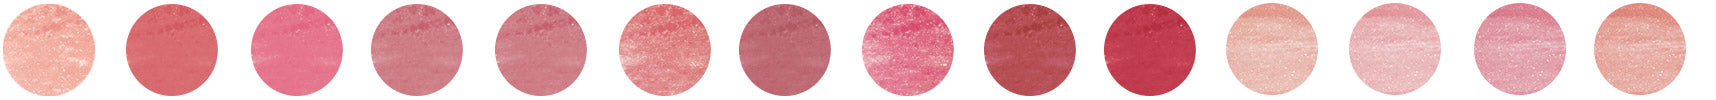 Moisture Infusion Lipgloss group image